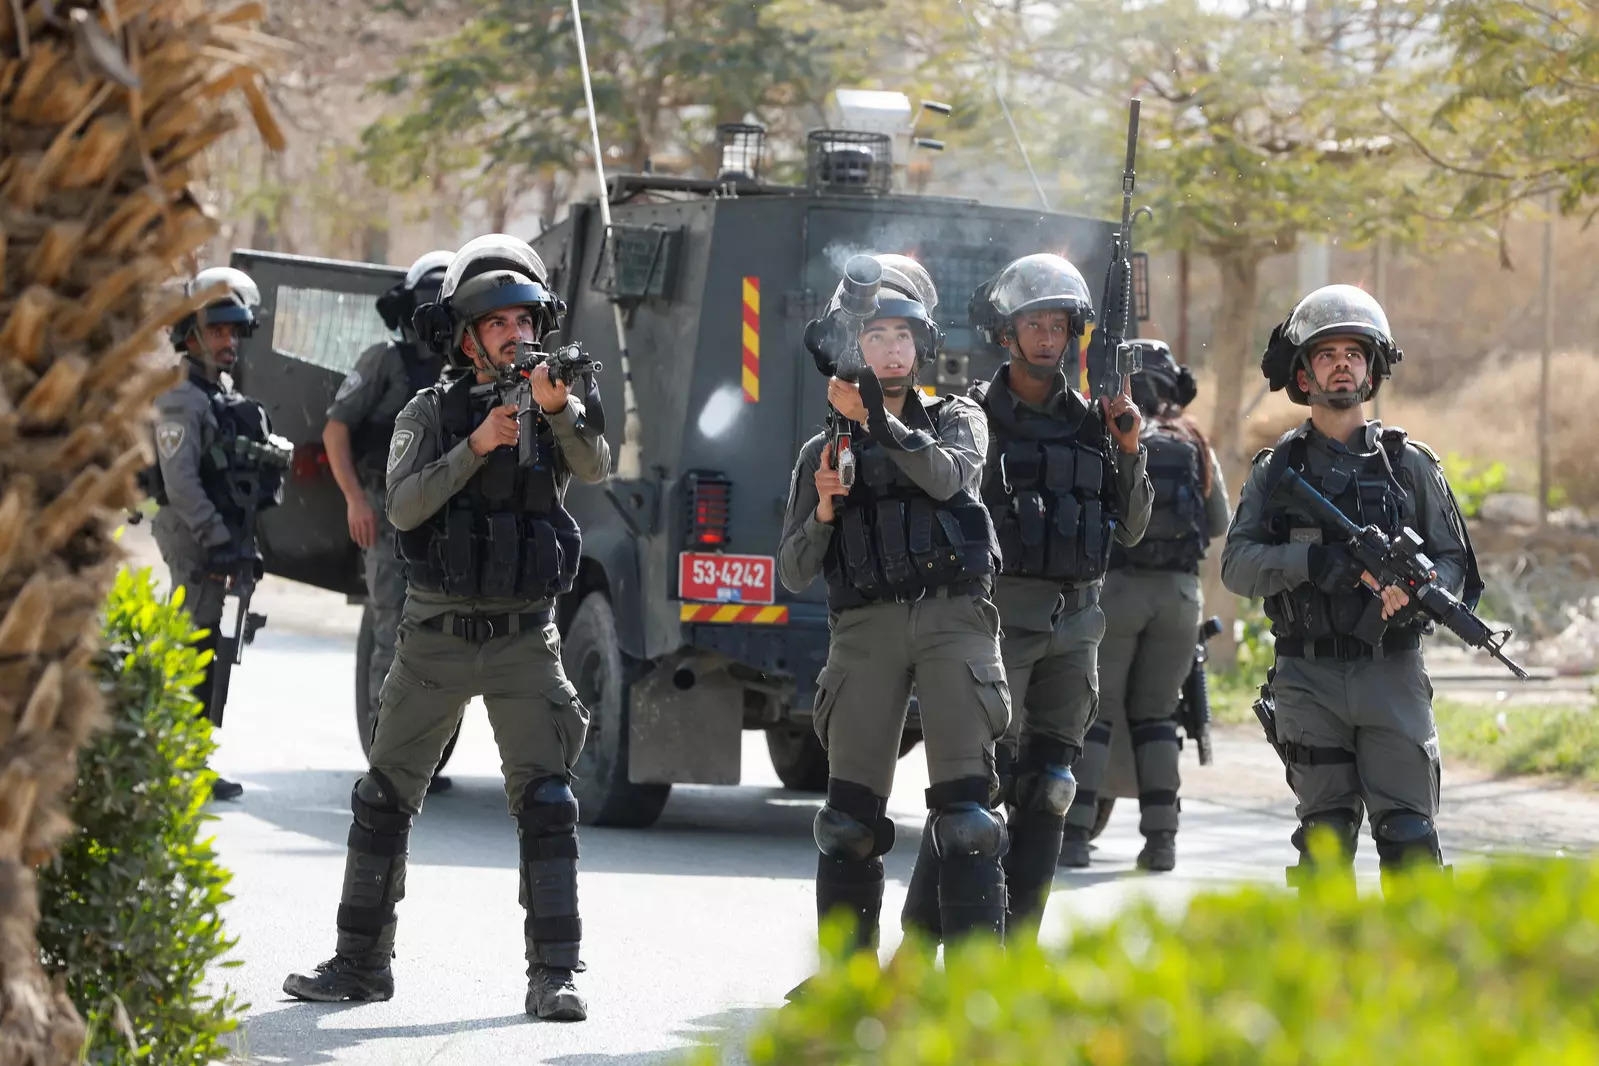 Israeli troops kill 3 Palestinian gunmen in clash, army says